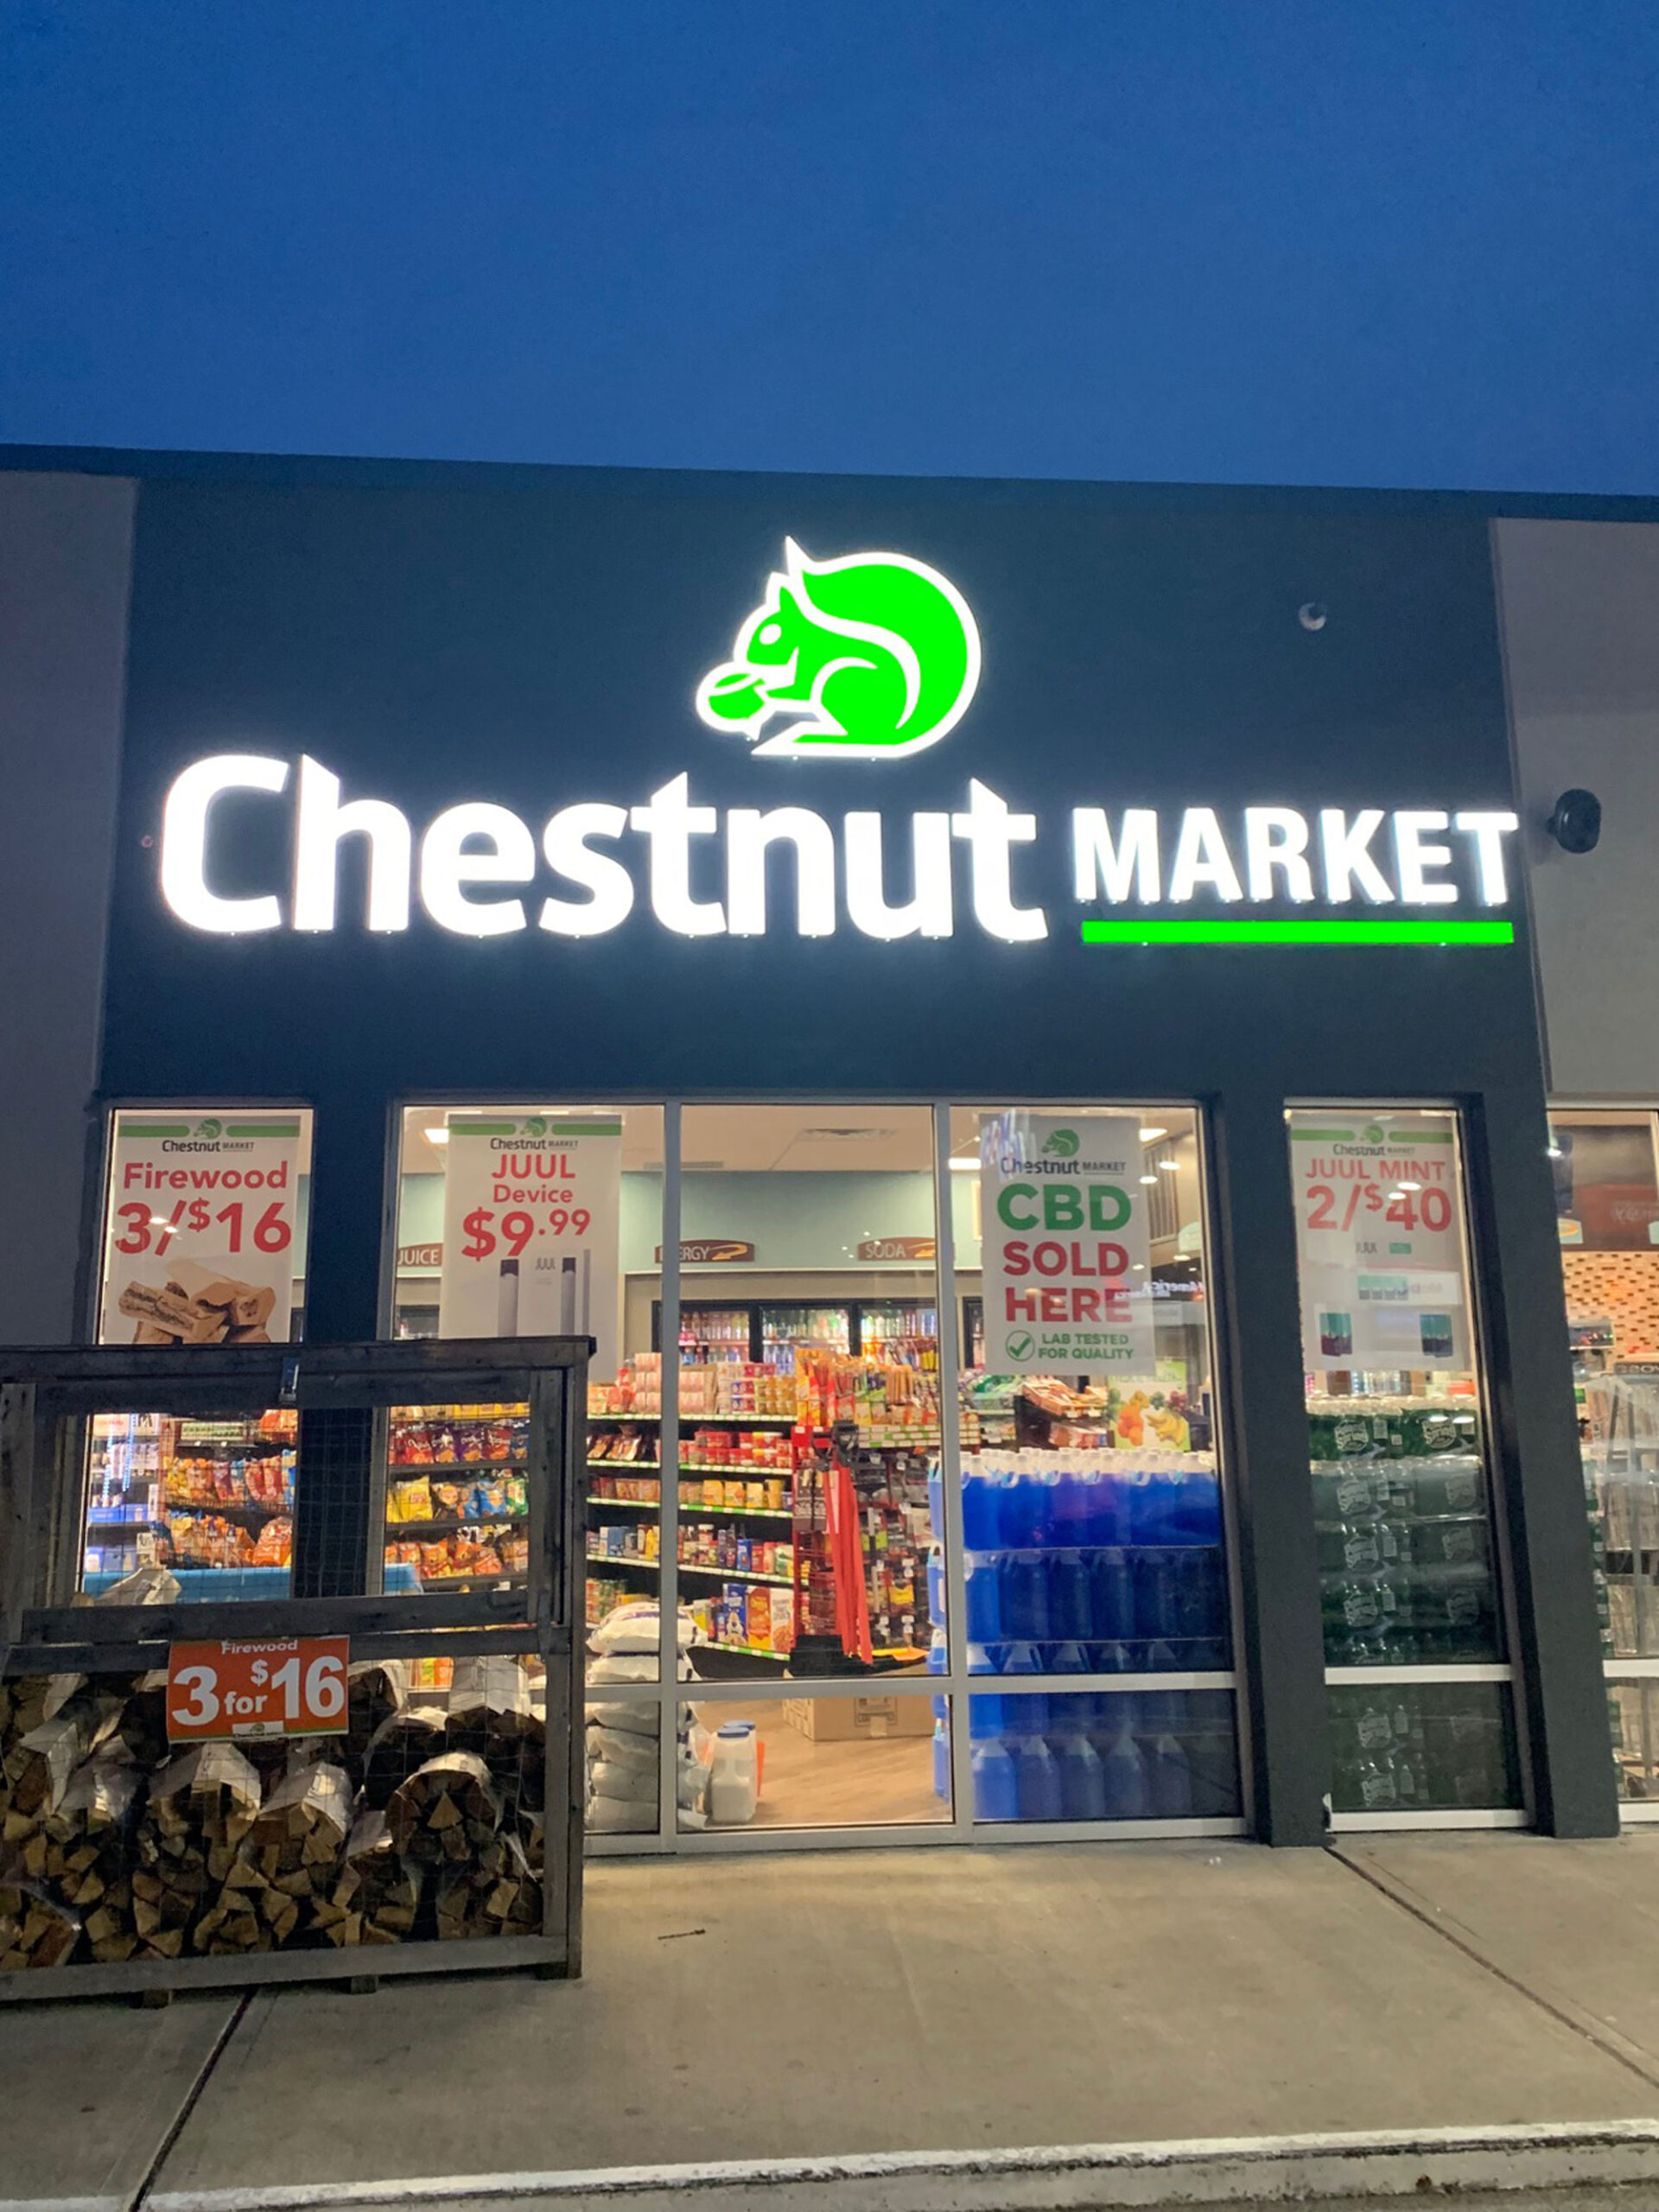 Chestnut Market store exterior rebrand